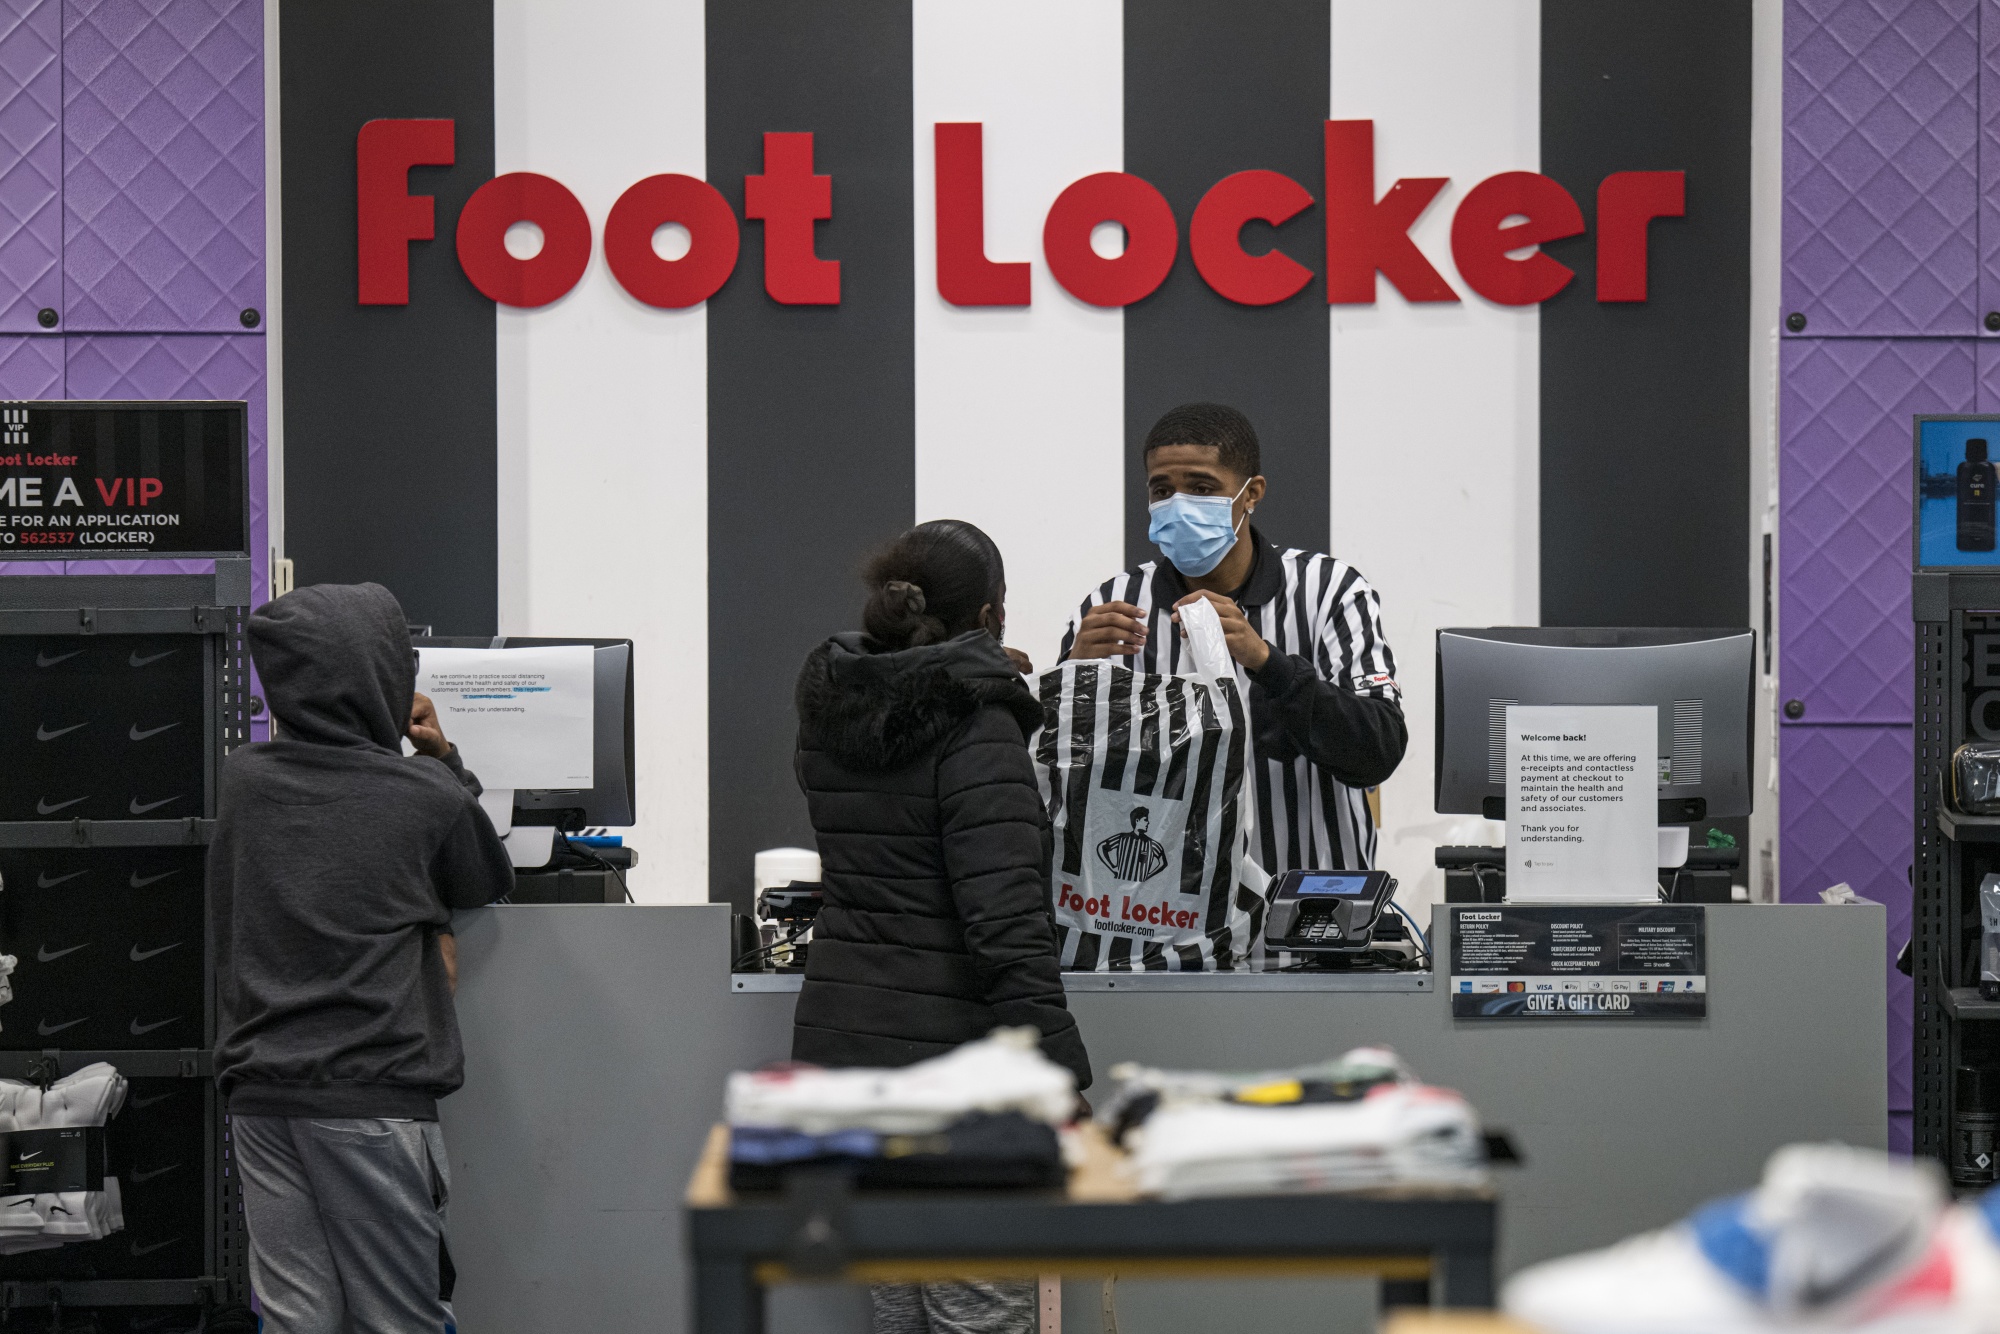 Working at Foot Locker